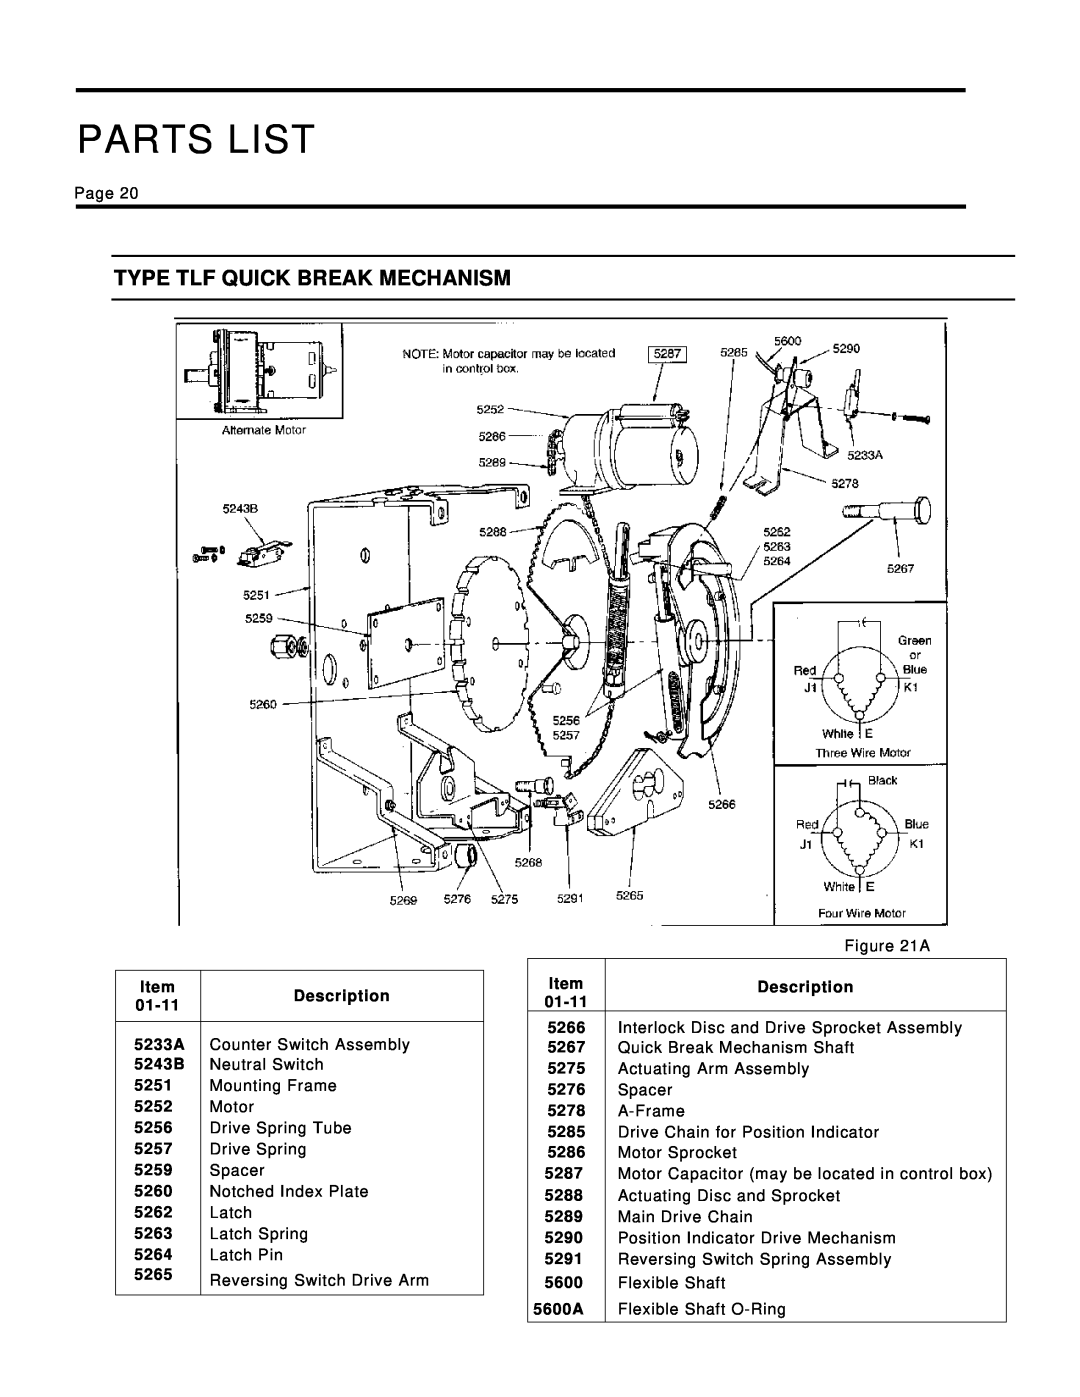 Siemens 21-115532-001 manual Type Tlf Quick Break Mechanism, Parts List 